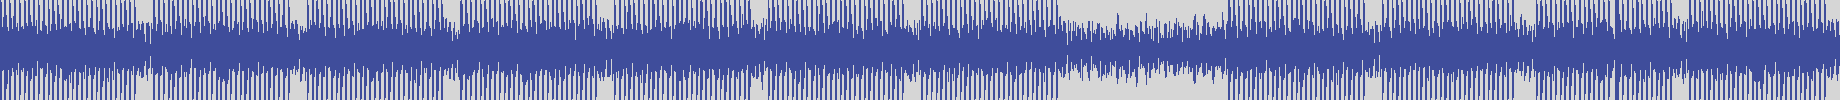 nf_boyz_records [NFY018] Mobix - Uplifter [Ambient Tech Mix] audio wave form